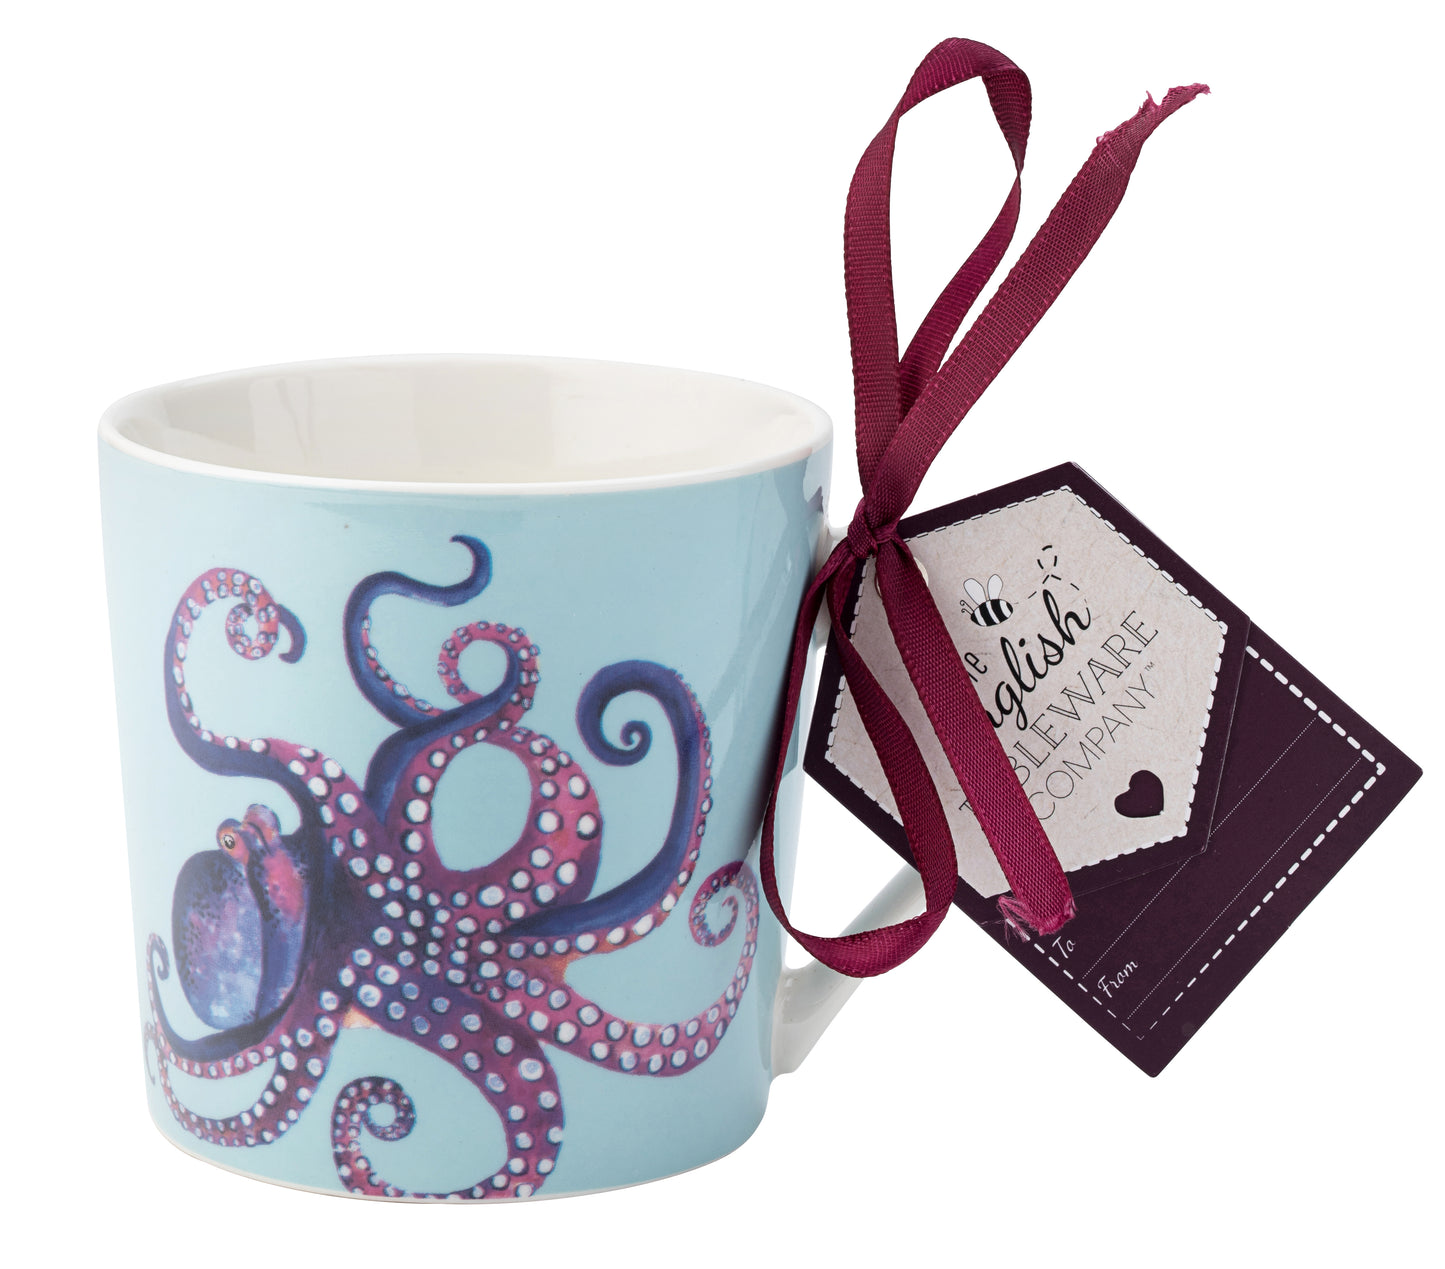 Dish Of The Day Mug, Octopus